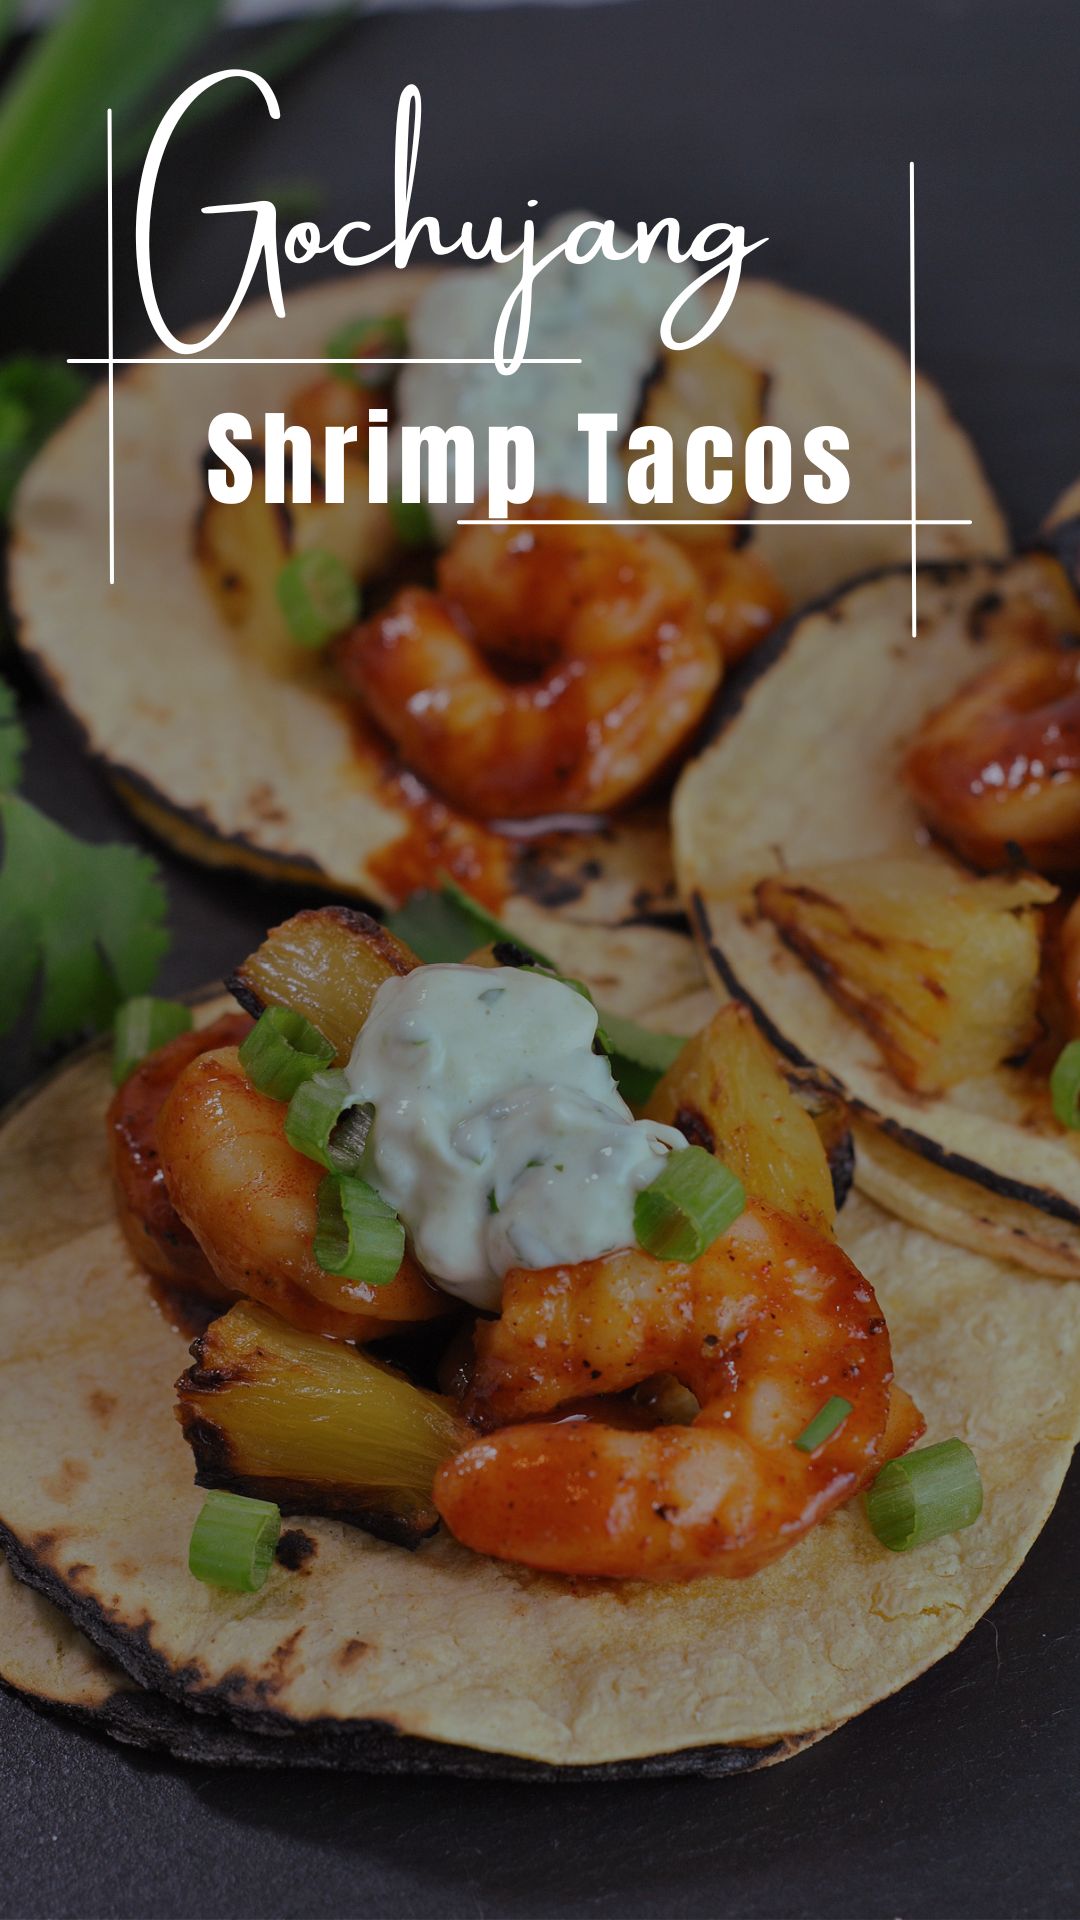 Gochujang Shrimp Tacos with Roasted Pineapple and Cilantro-Lime Sauce via @preventionrd